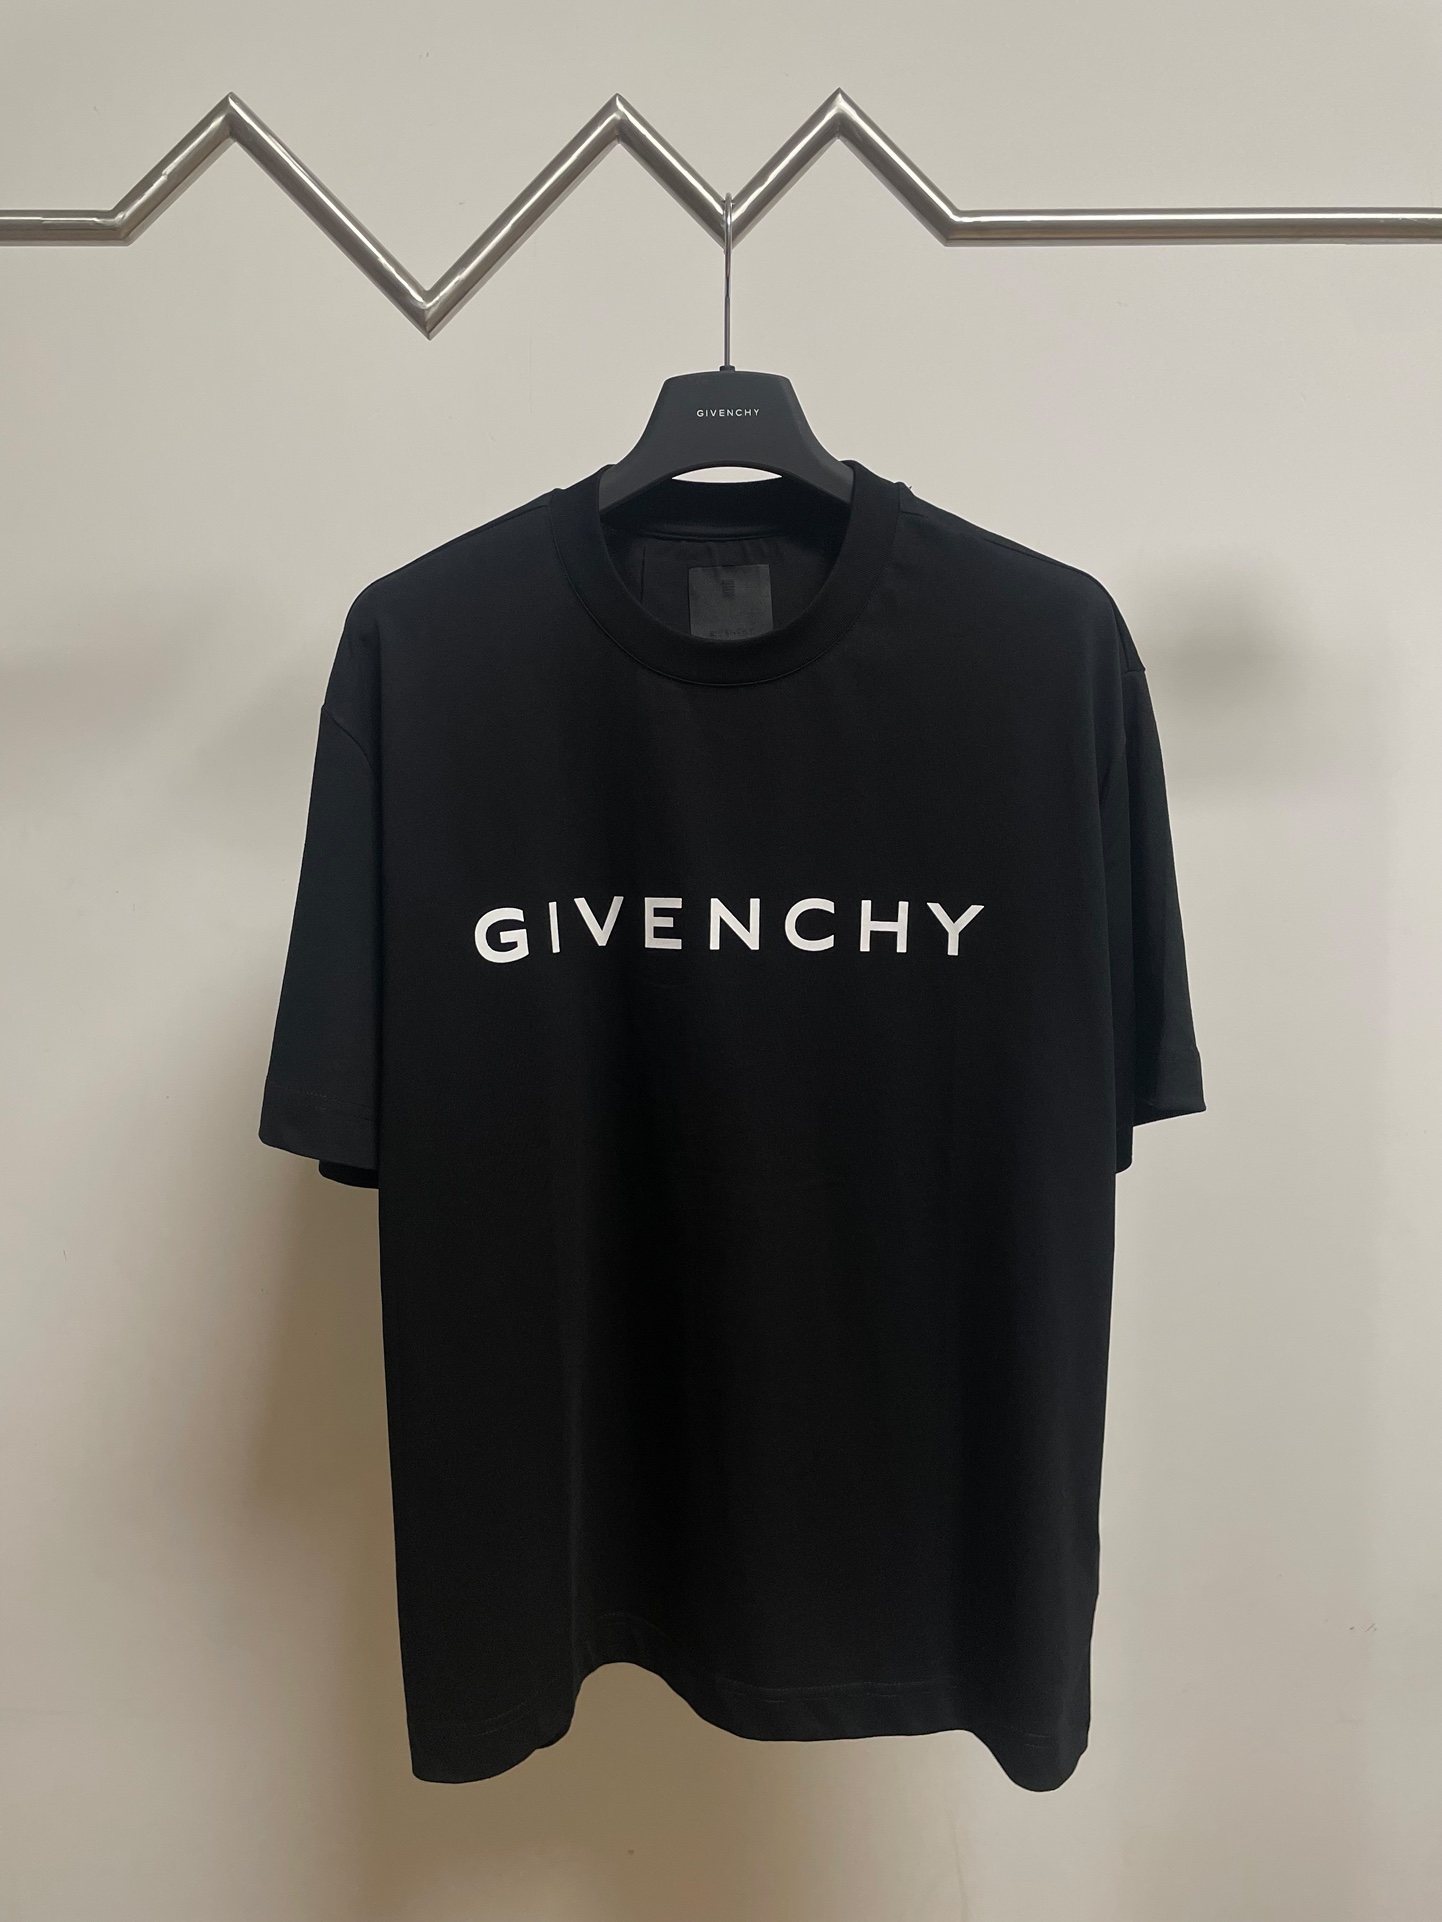 Givenchy Clothing T-Shirt Black Unisex Cotton Mercerized Spring/Summer Collection Short Sleeve